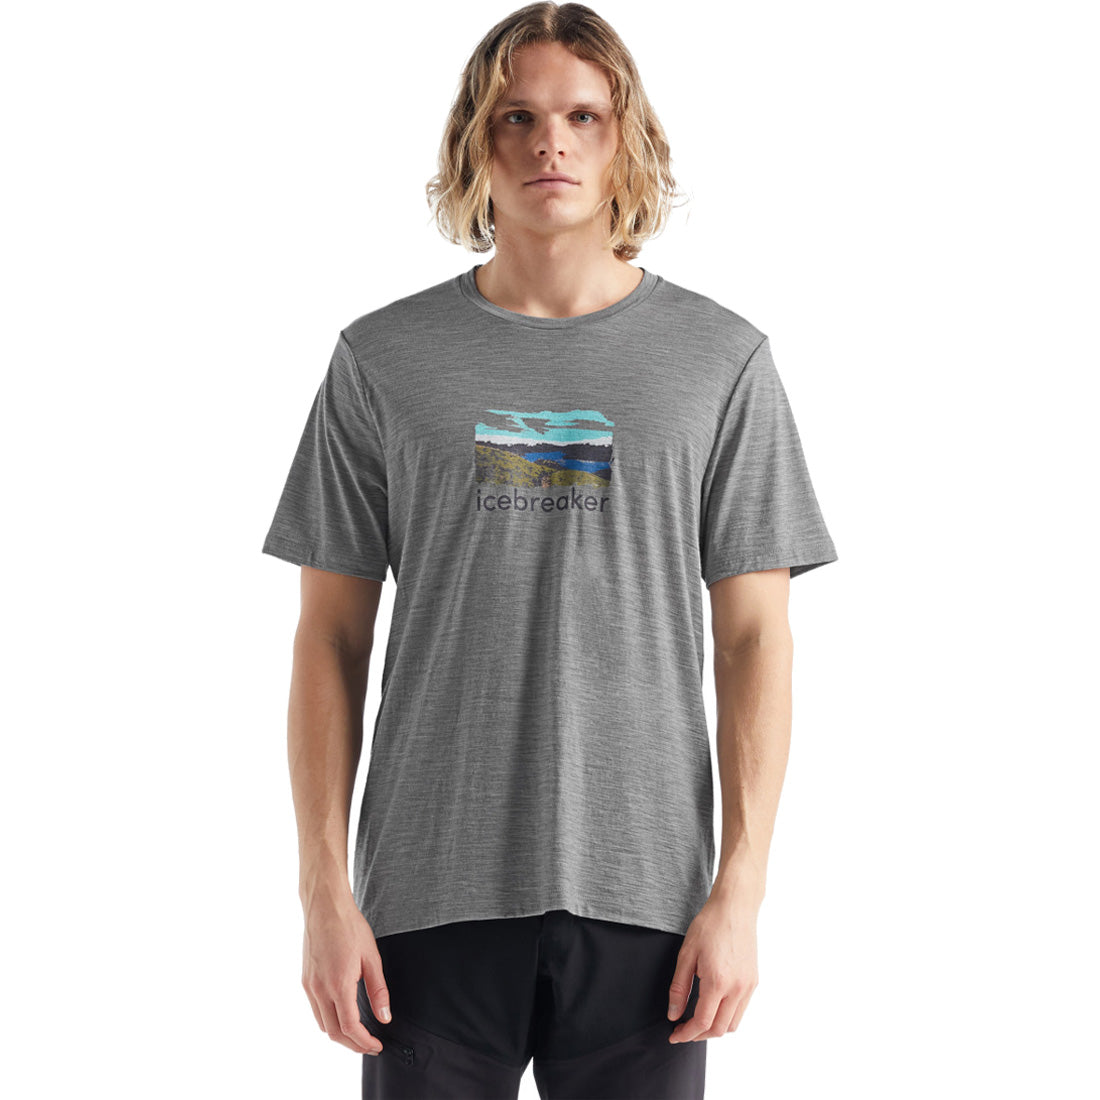 Icebreaker Merino Tech Lite II Short Sleeve T-Shirt Trailhead - Men's